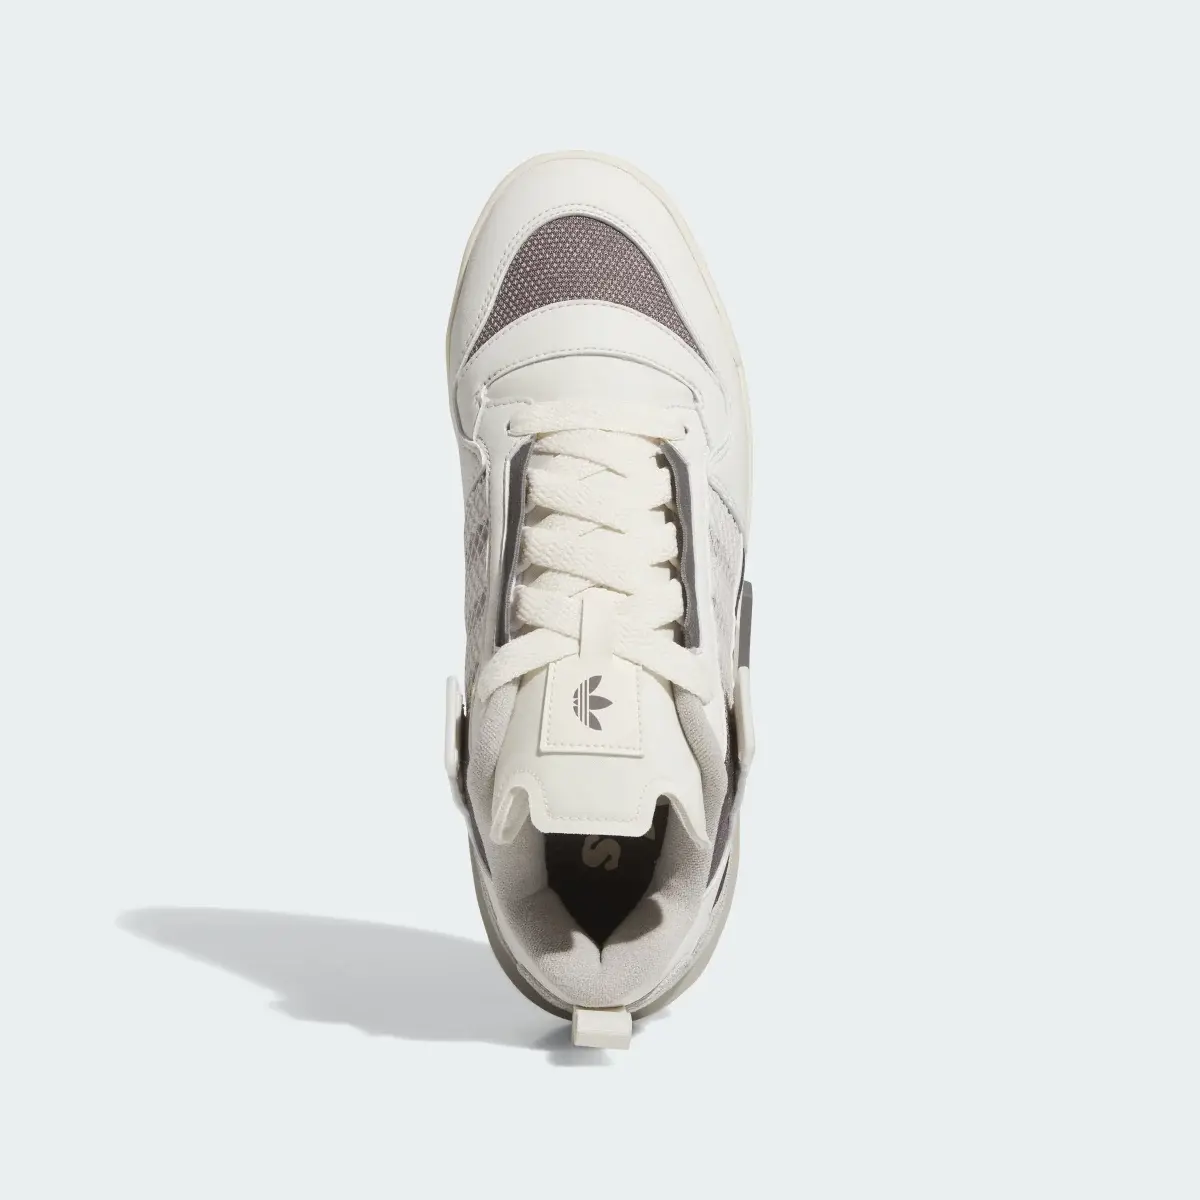 Adidas Forum Mod Low Shoes. 3